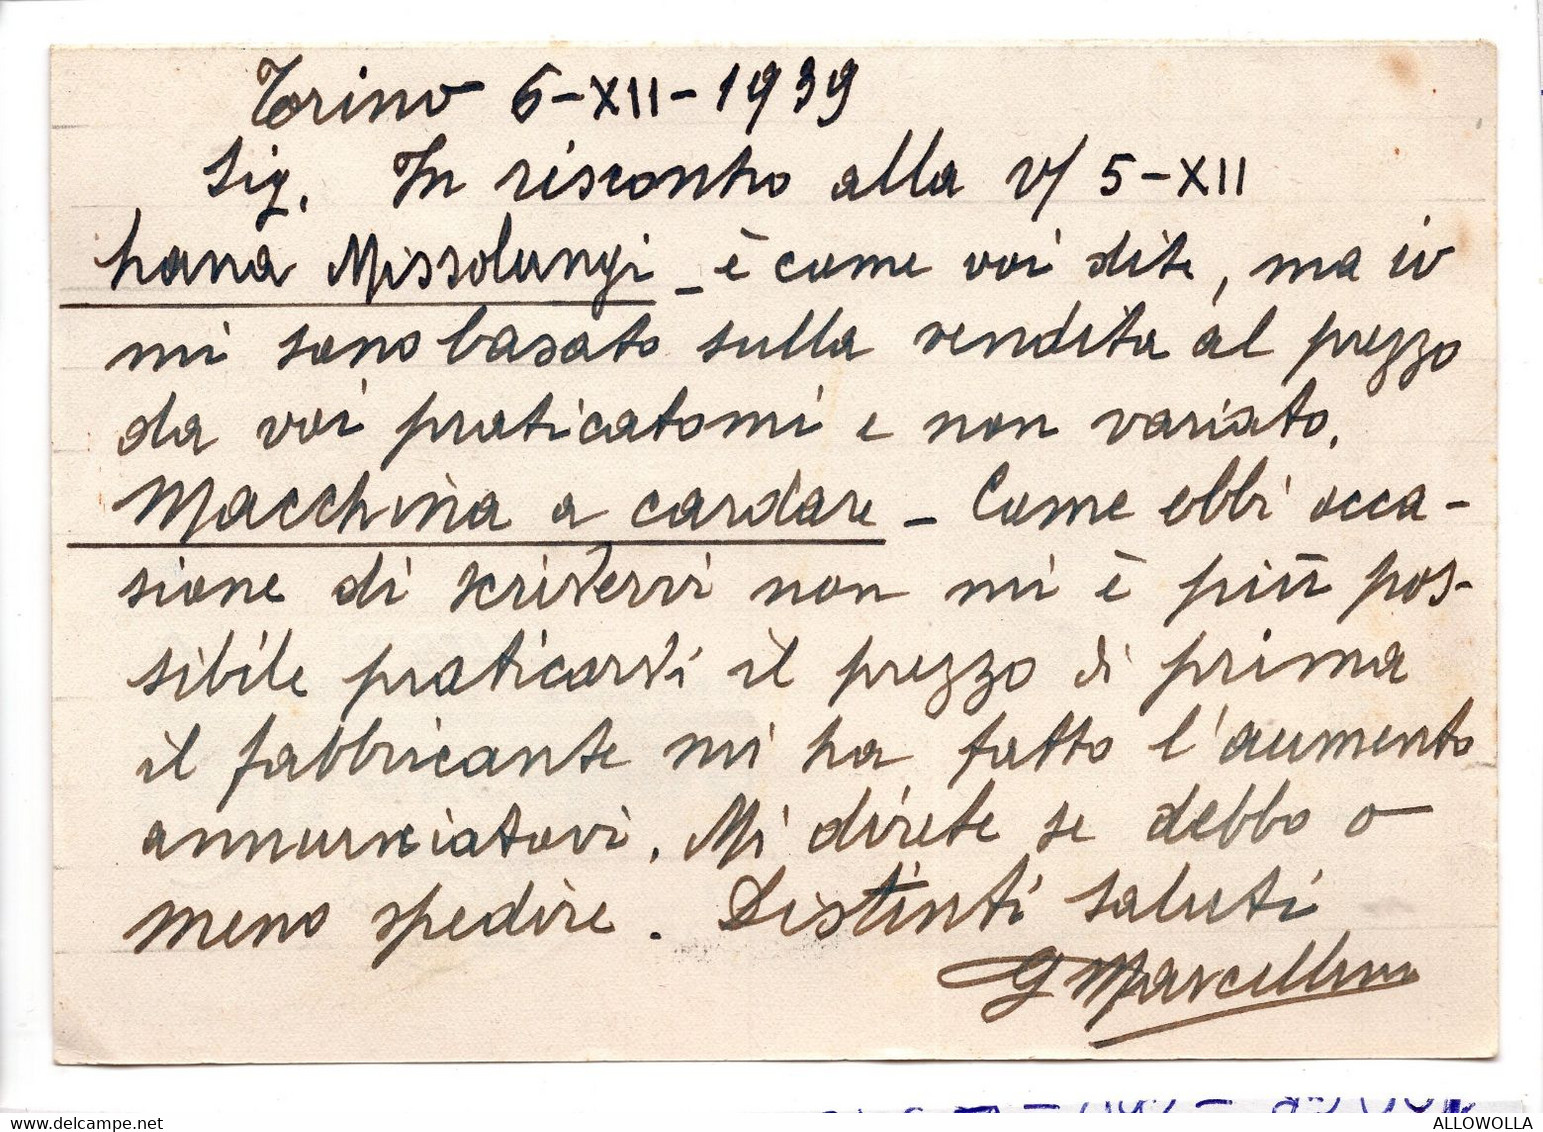 19555 " G. MARCELLINO-TORINO "-CART. POST. ORIG. SPEDITA 1939 - Shopkeepers